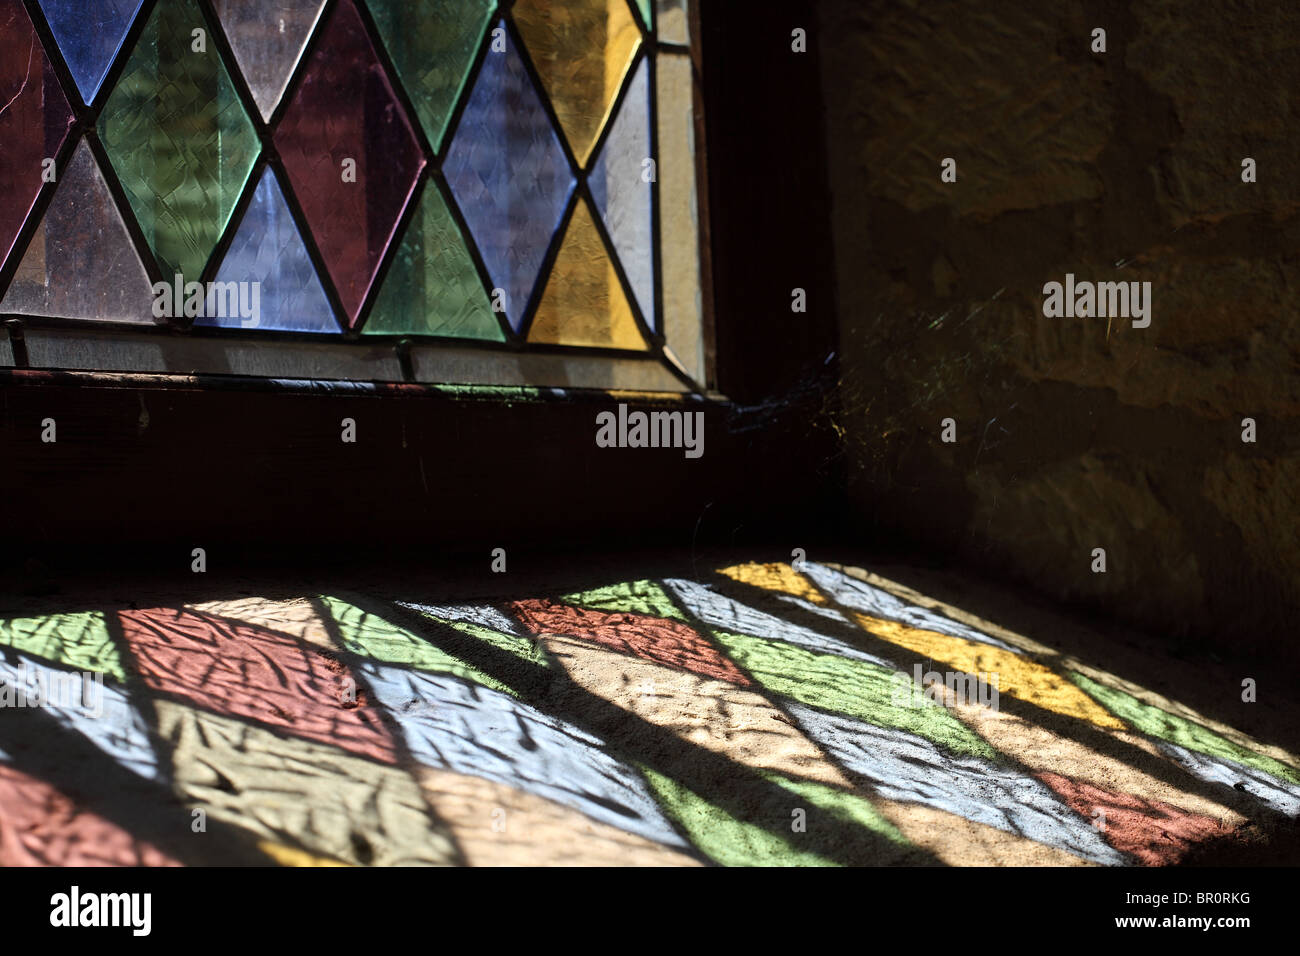 https://c8.alamy.com/comp/BR0RKG/reflected-light-through-colored-glass-window-BR0RKG.jpg